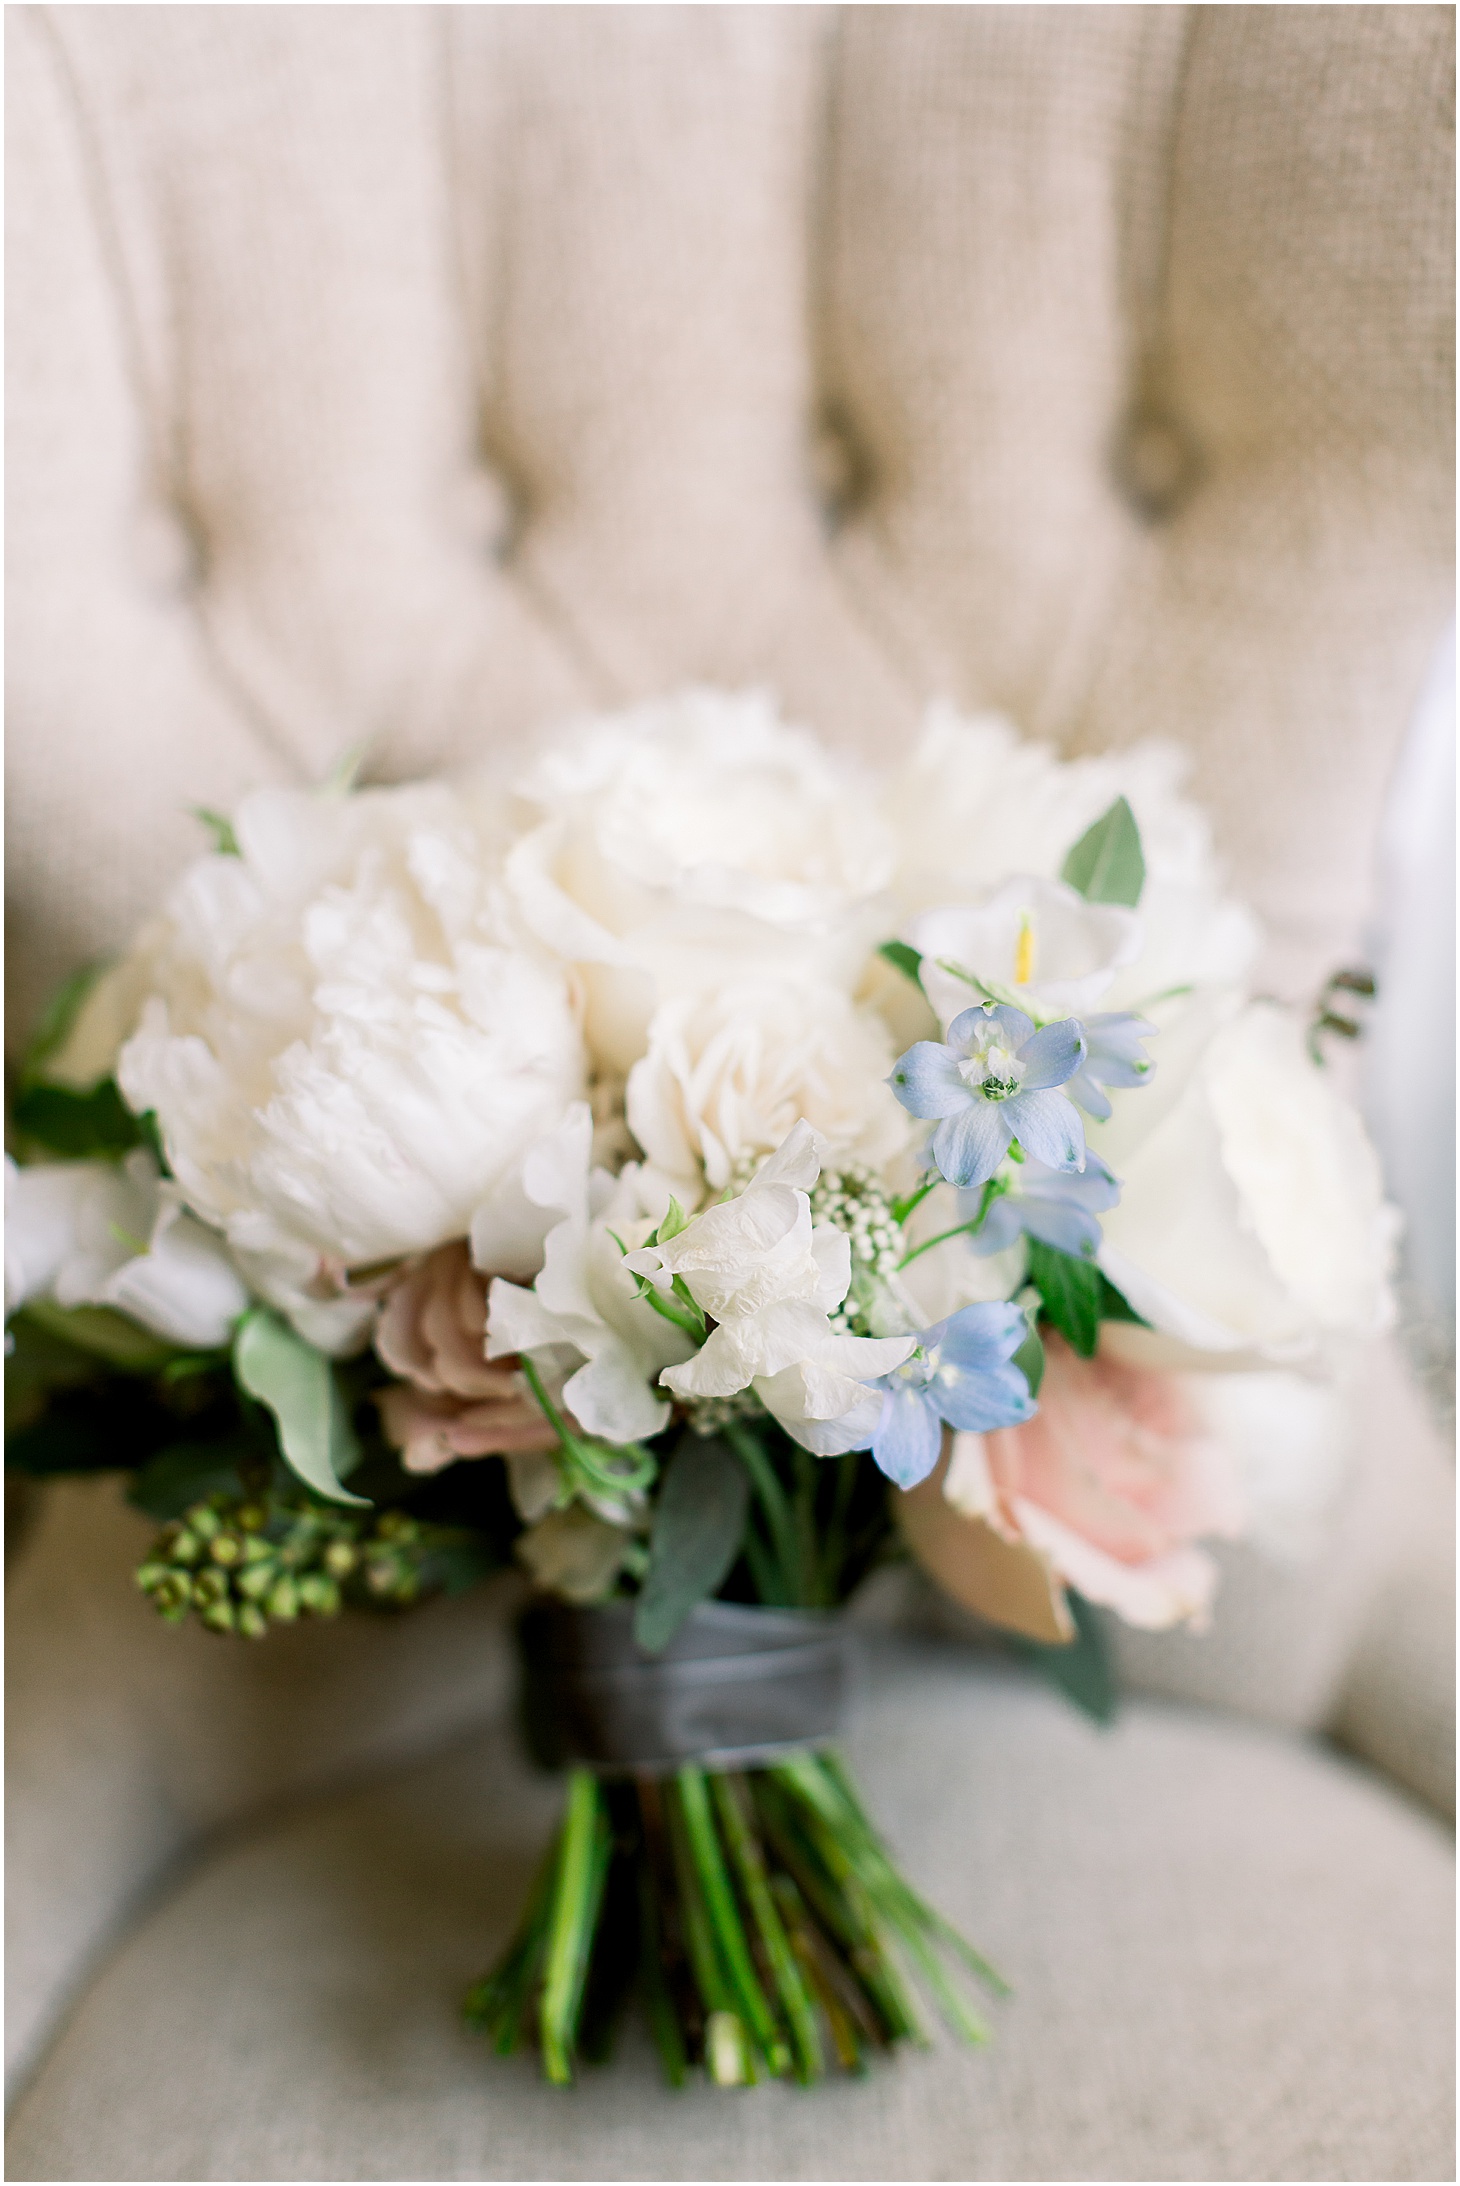 Wild Green Yonder Wedding Bouquet, Mandarin Oriental Hotel Bridal Suite, Romantic Spring Wedding at Dumbarton House Gardens, Sarah Bradshaw Photography